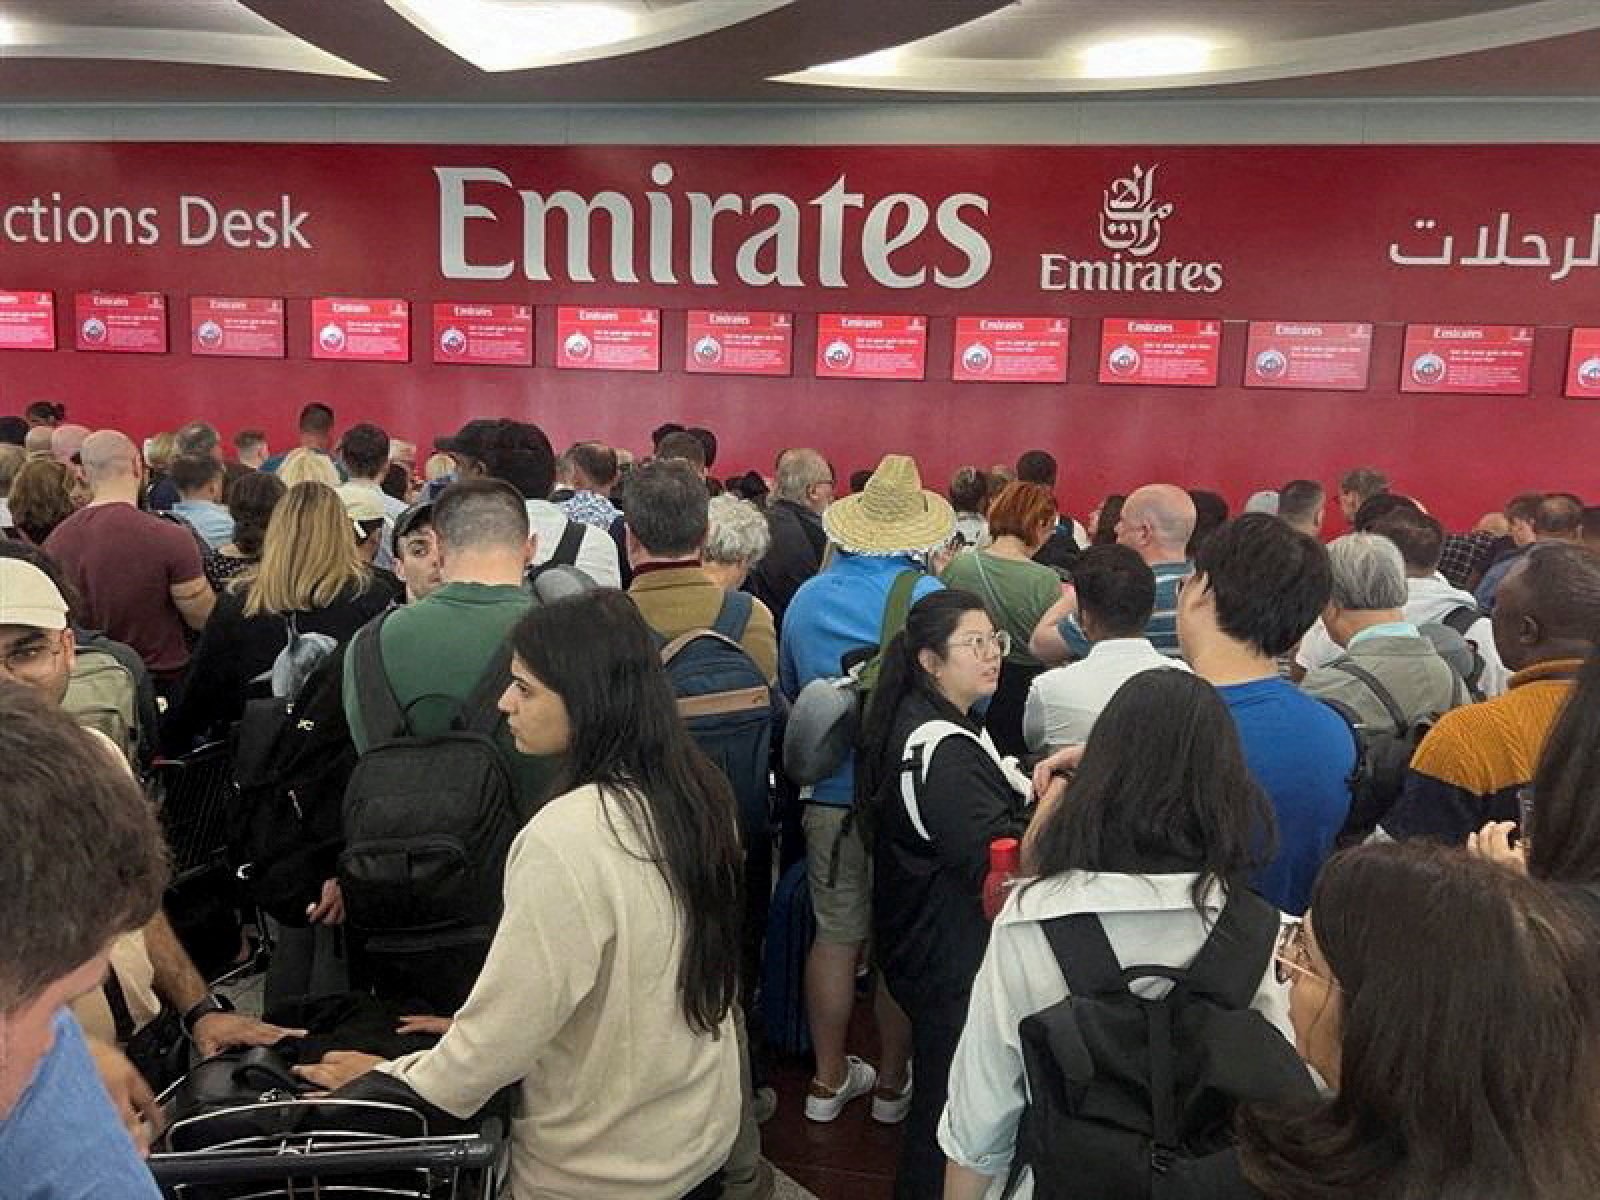 Emirates suspends flights transiting through Dubai after record rains